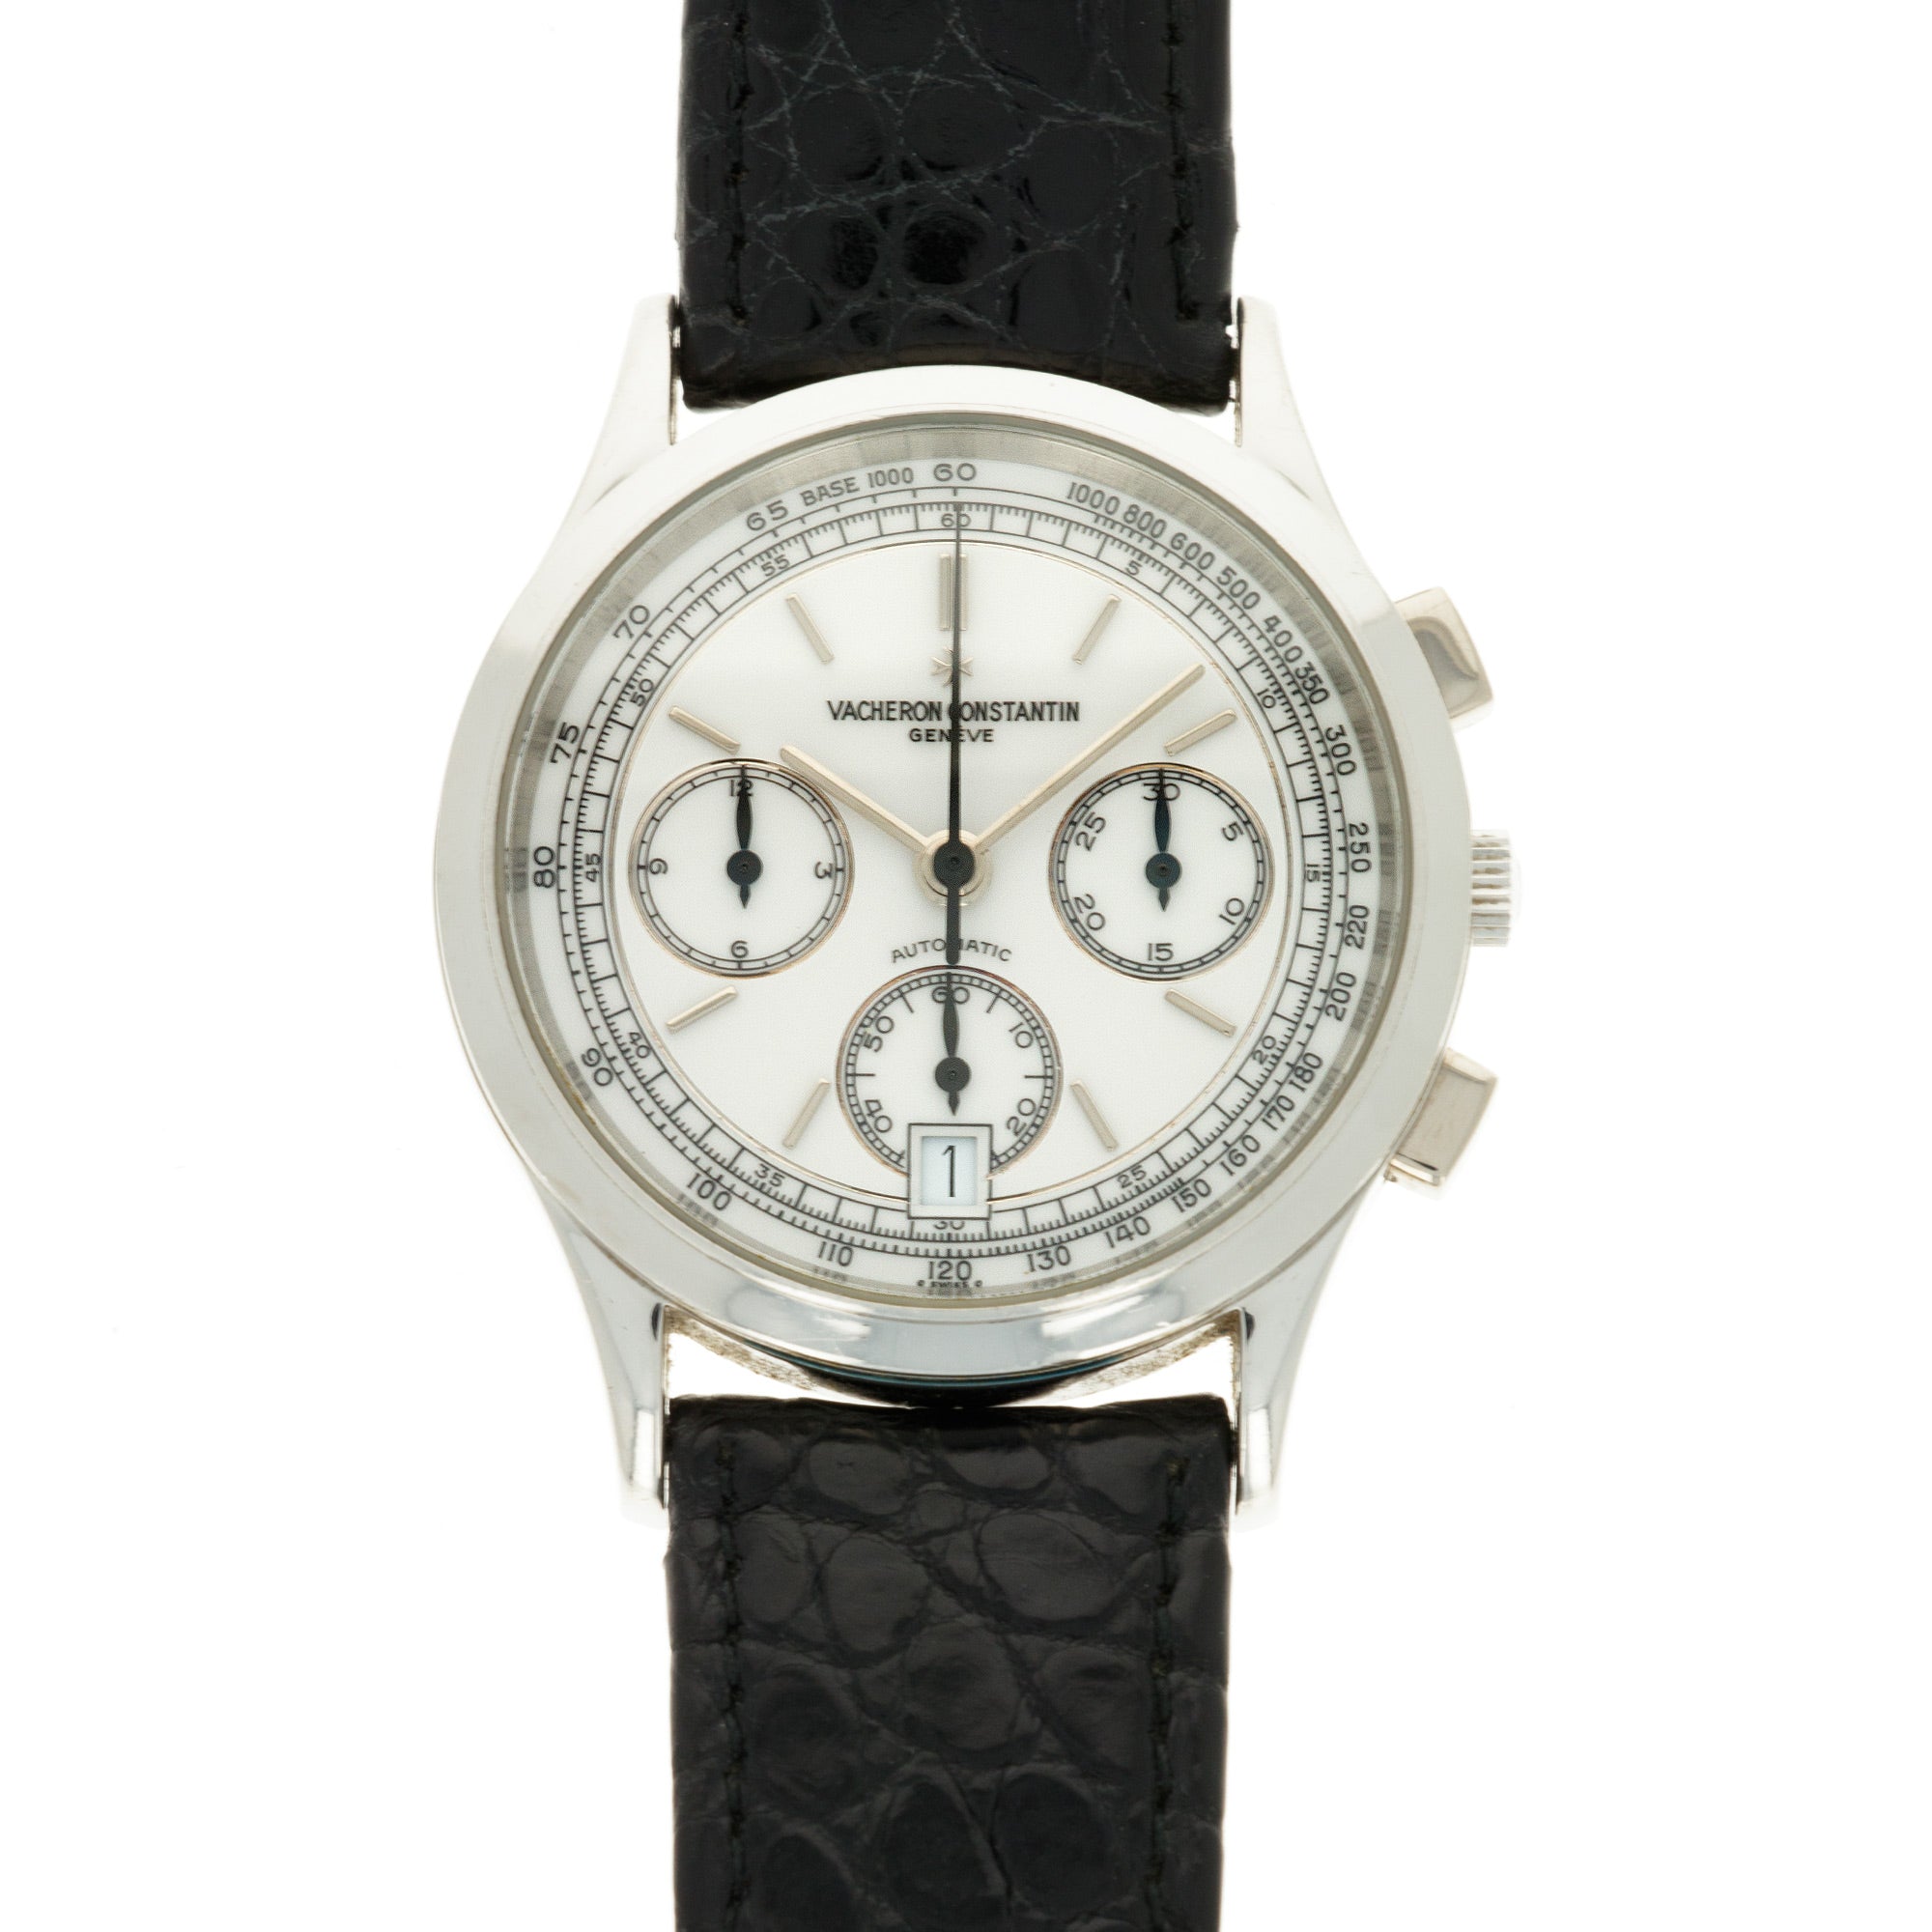 Vacheron Constantin - Vacheron Constantin Platinum Chronograph Watch Ref. 49002 - The Keystone Watches